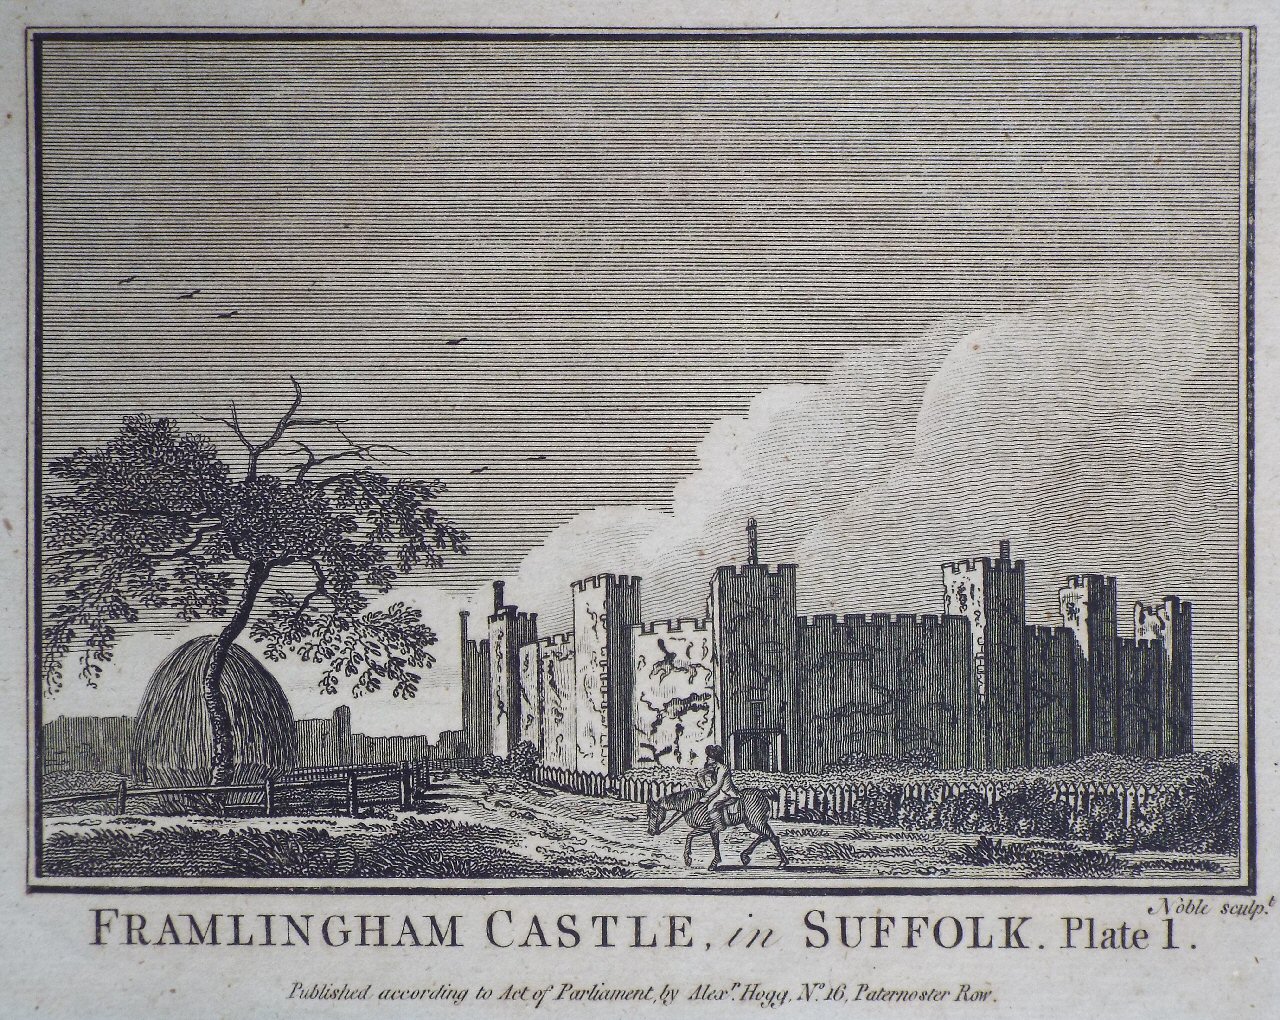 Print - Framlingham Castle, in Suffolk. Plate 1. - 